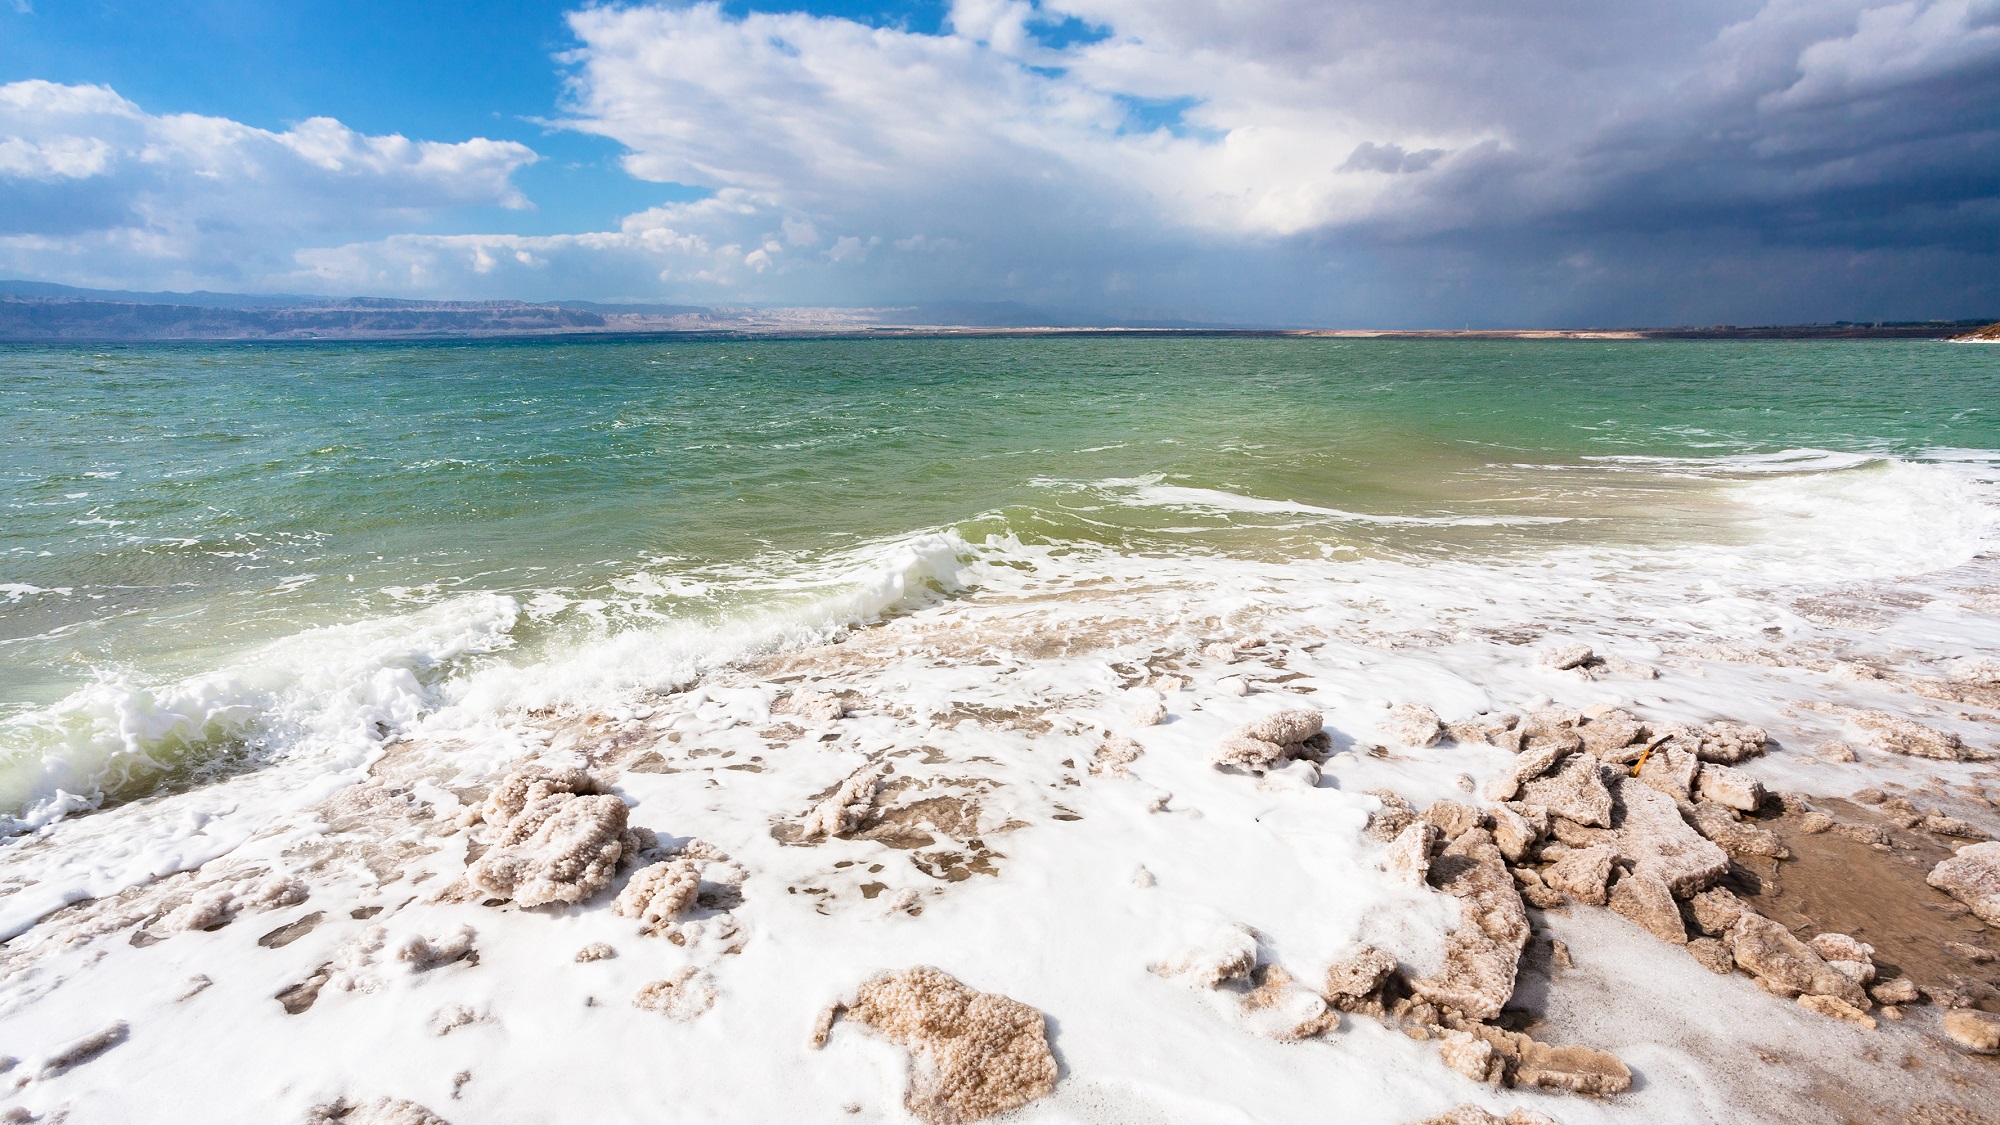 The Dead Sea - Saltiest Sea in The World